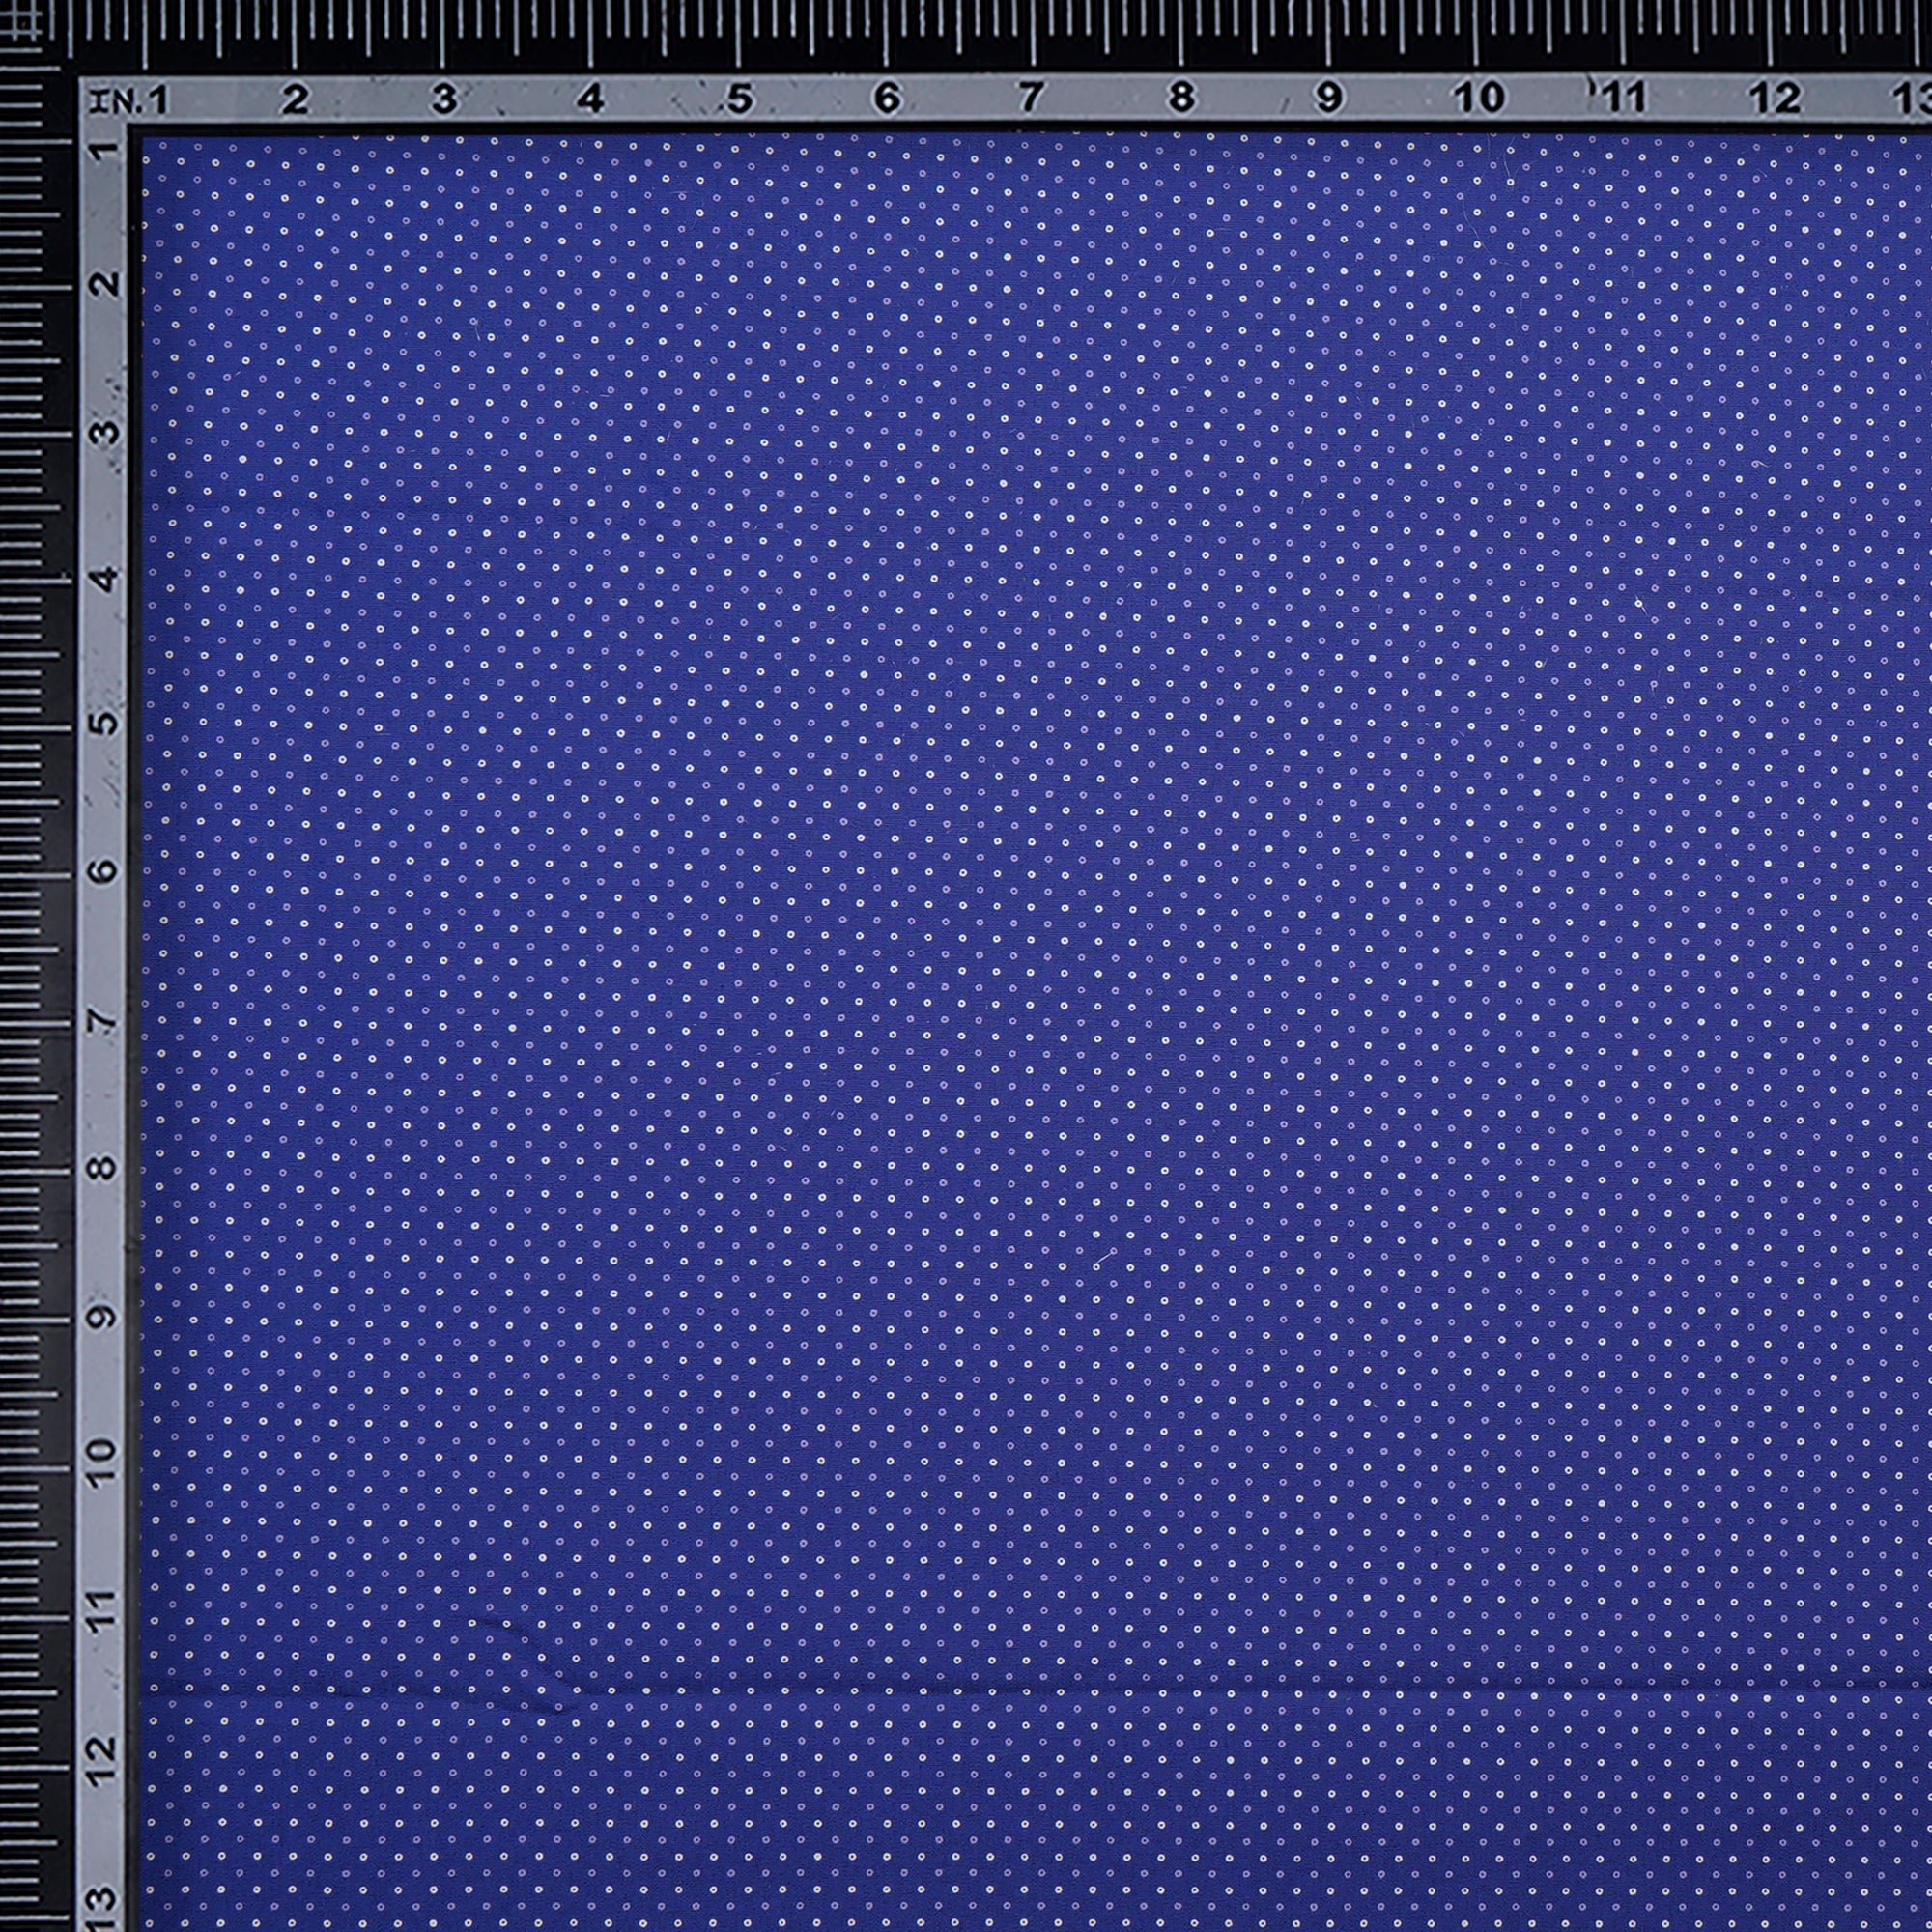 Amparo Blue White Geometric Premium Cotton Printed Unstitched Men's Shirt Piece (58 Inches | 1.60 Meters)